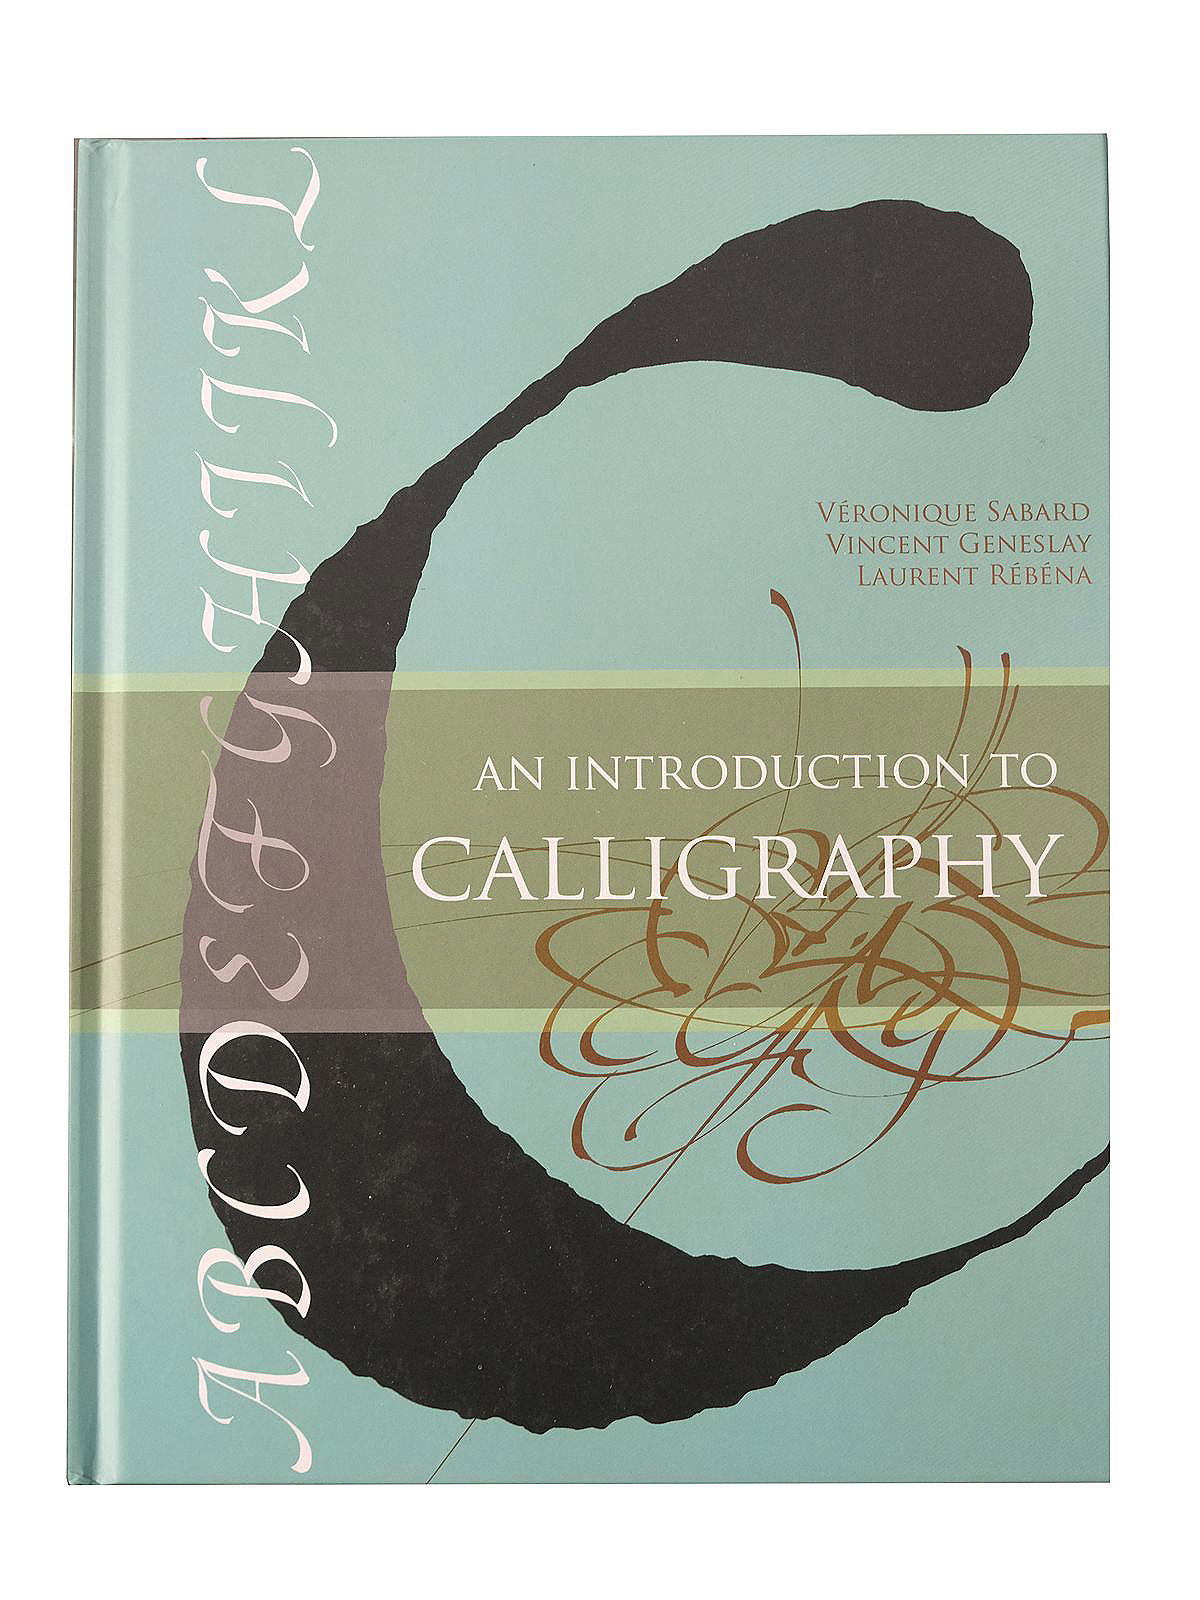 Uncial: Calligraphy workbook (Calligraphy Workbooks)